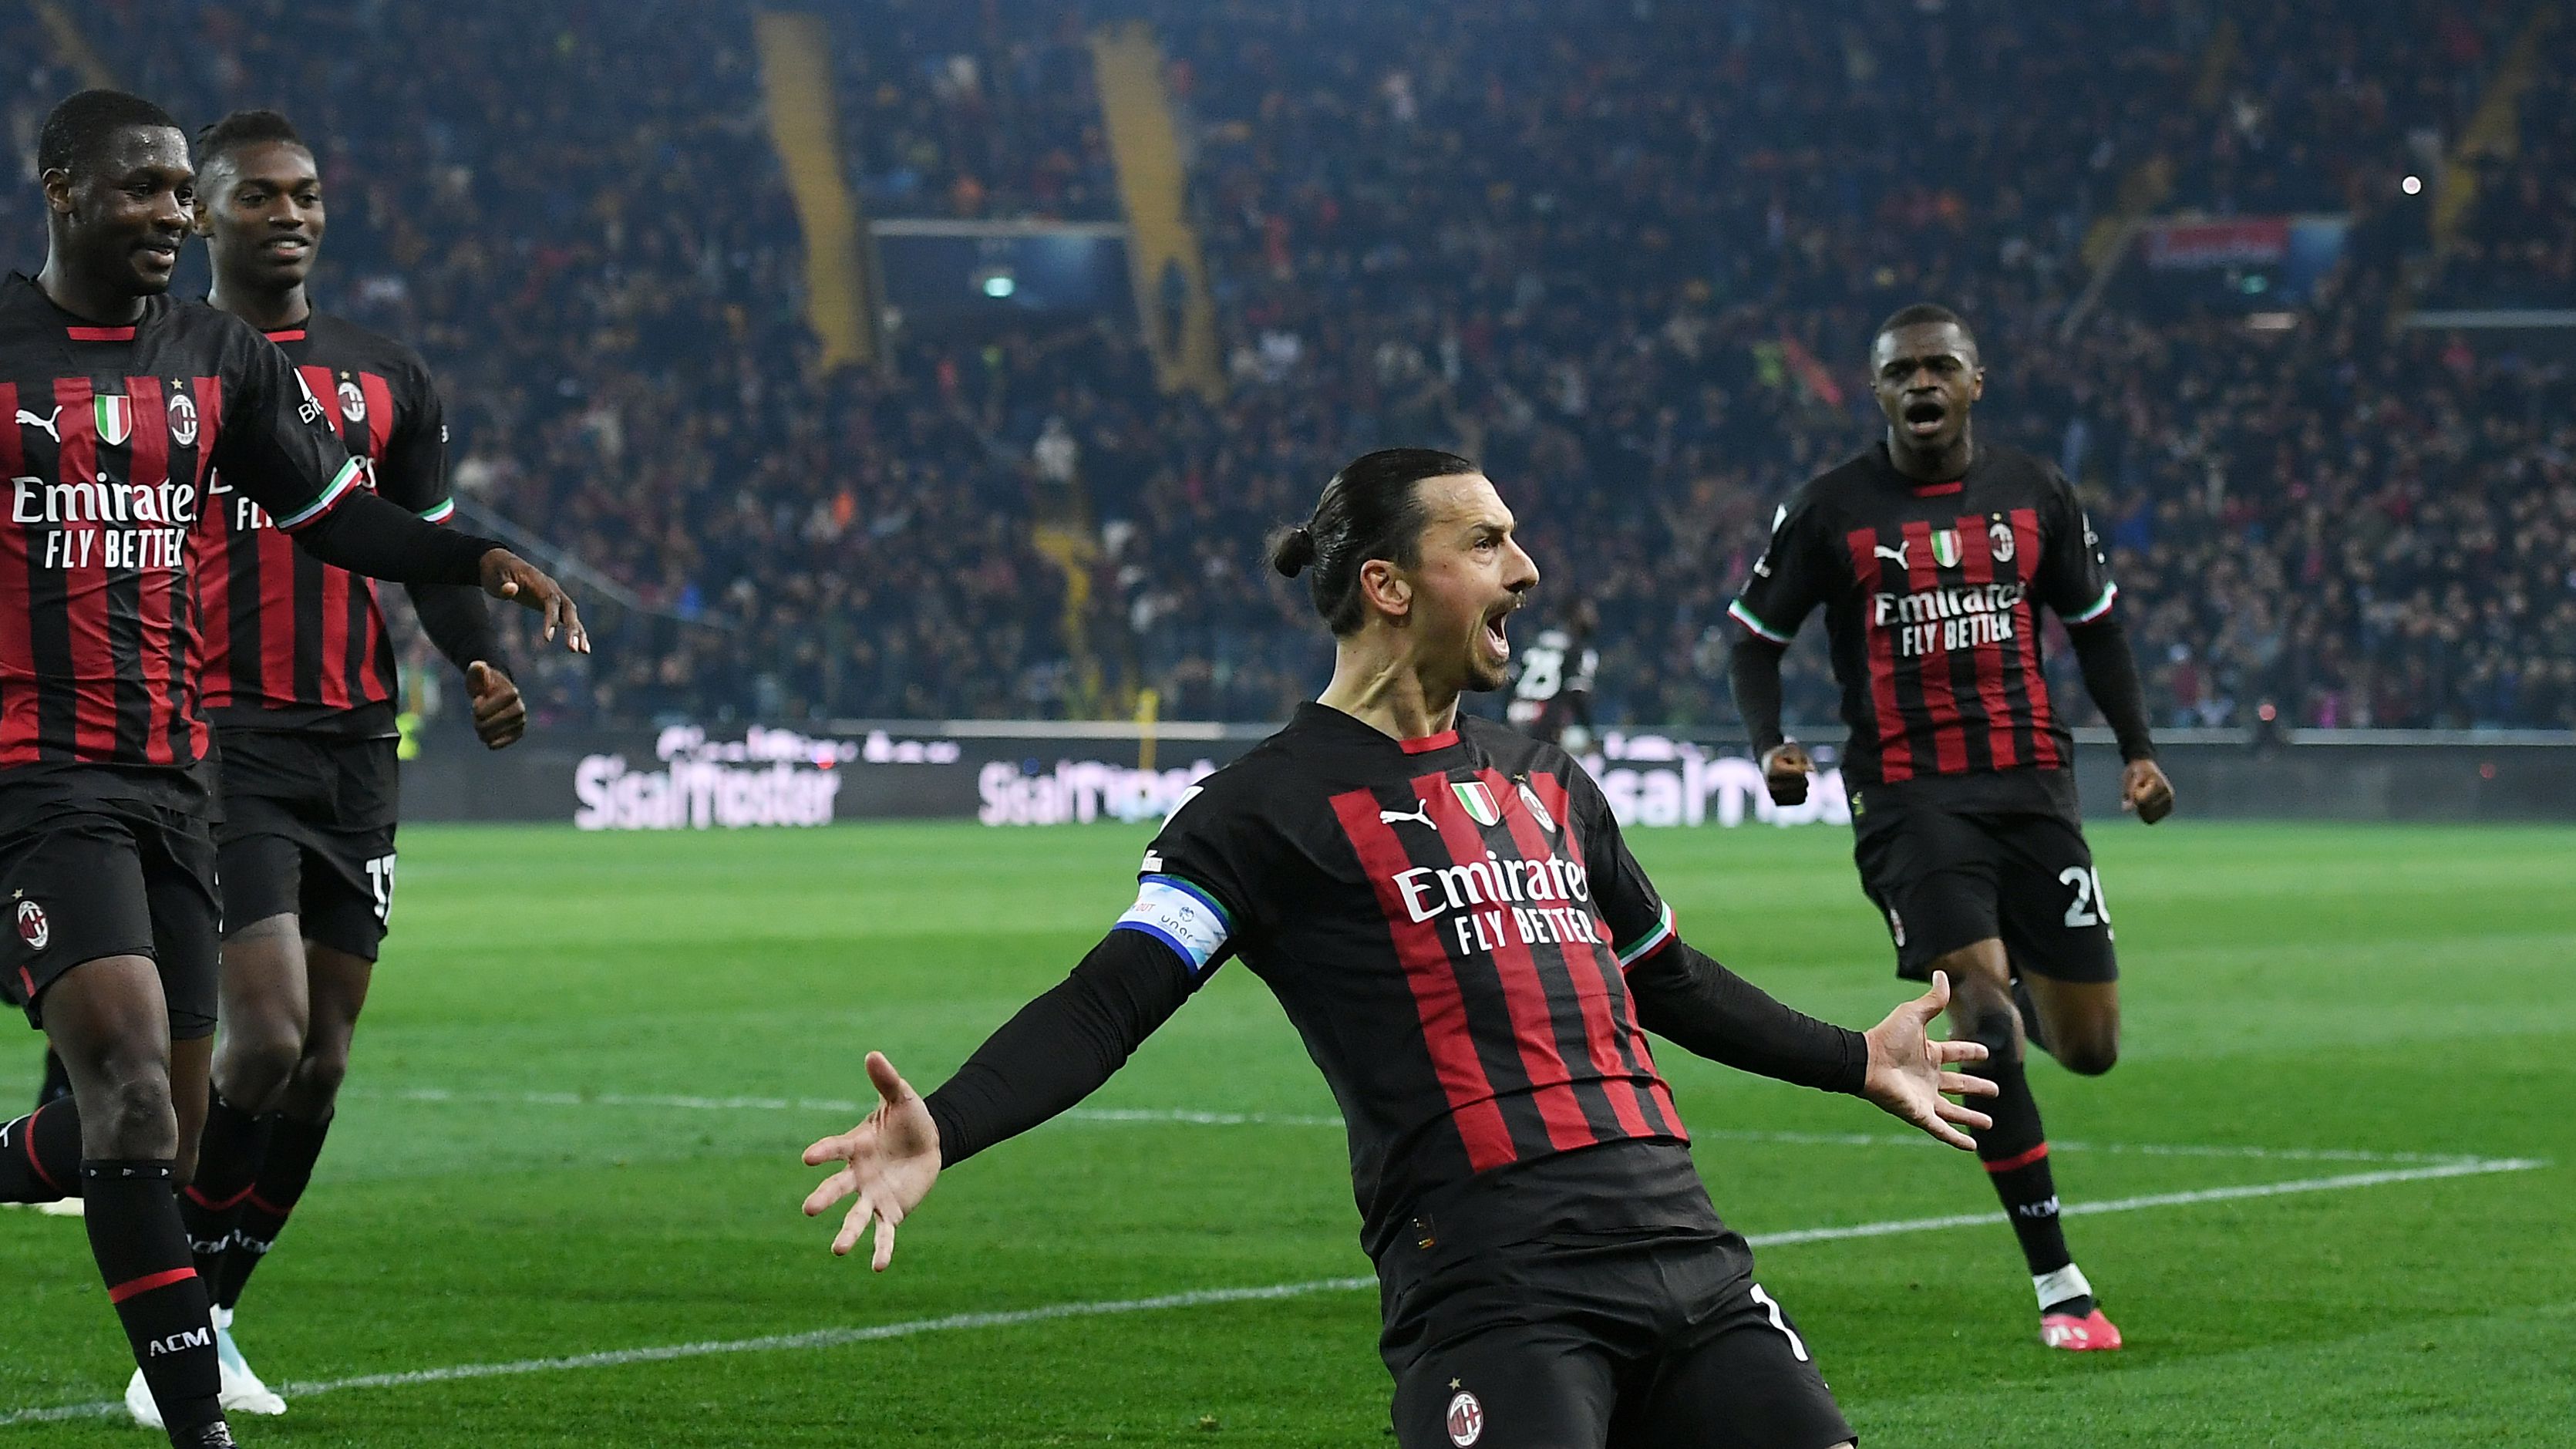 Ibrahimovic comemorando gol pelo Milan (Crédito: Getty Images)